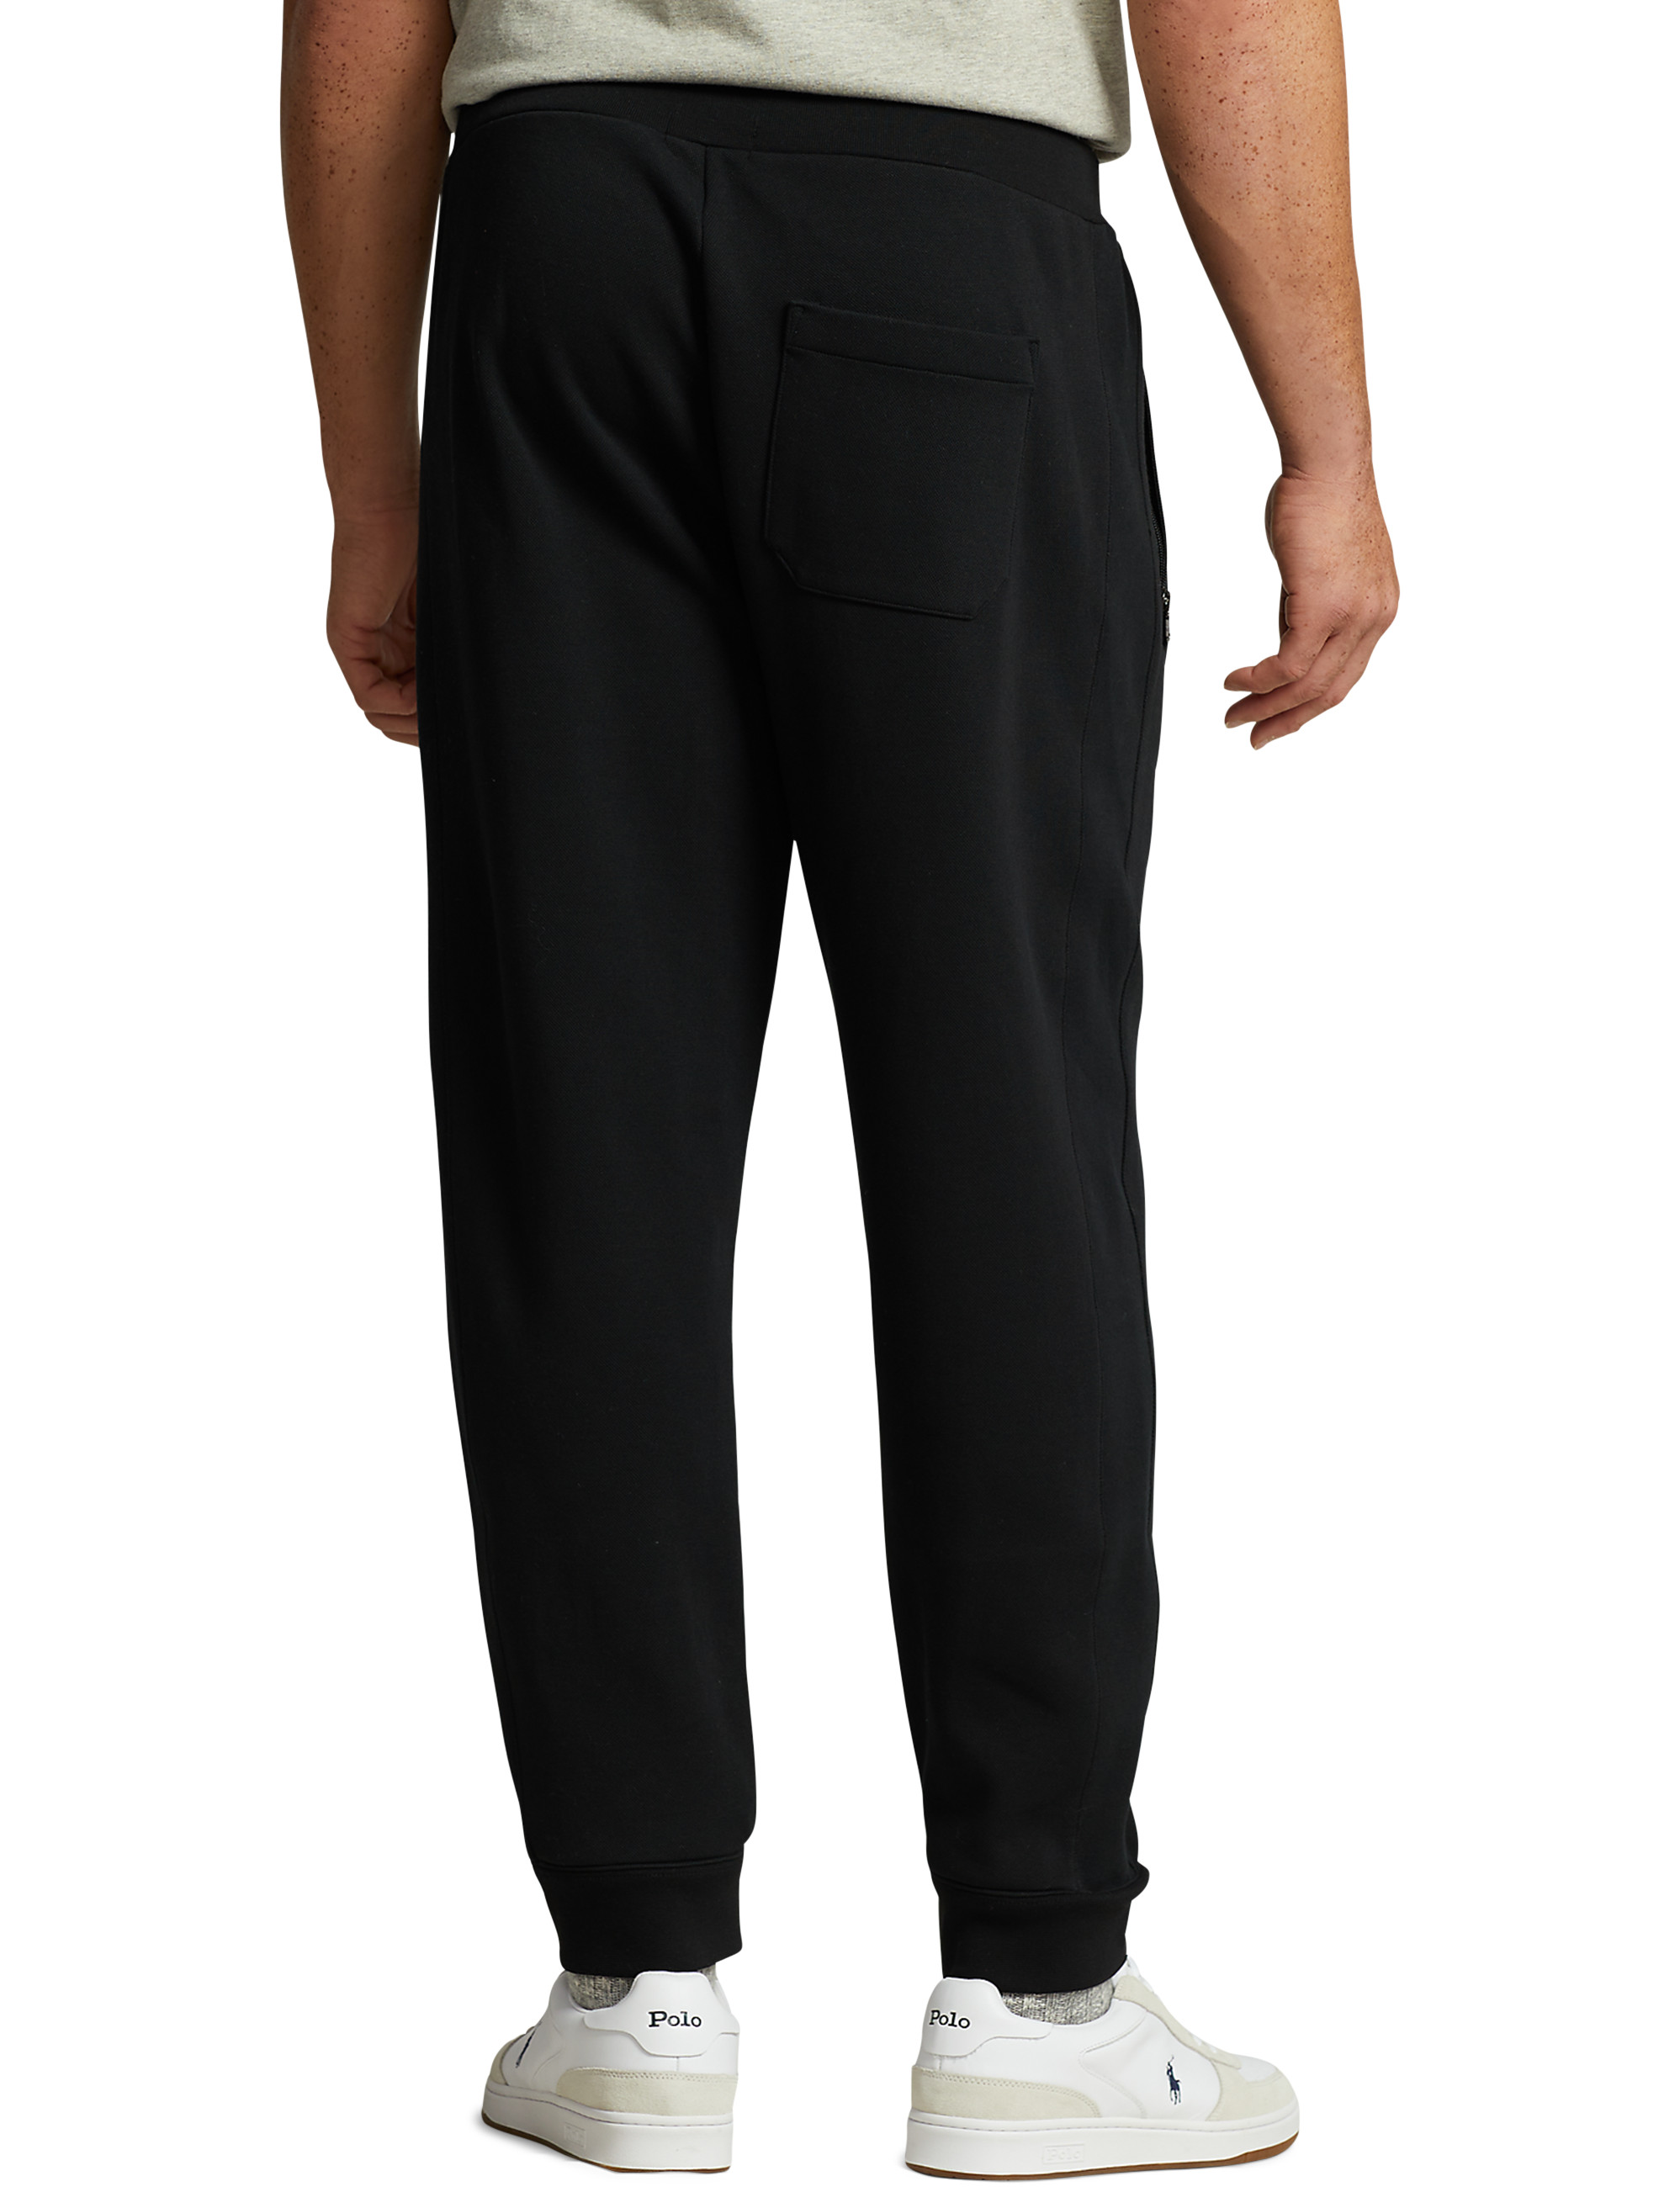 Black Sweatpants Fashion Men Casual Baggy Sweat Pants Streetwear